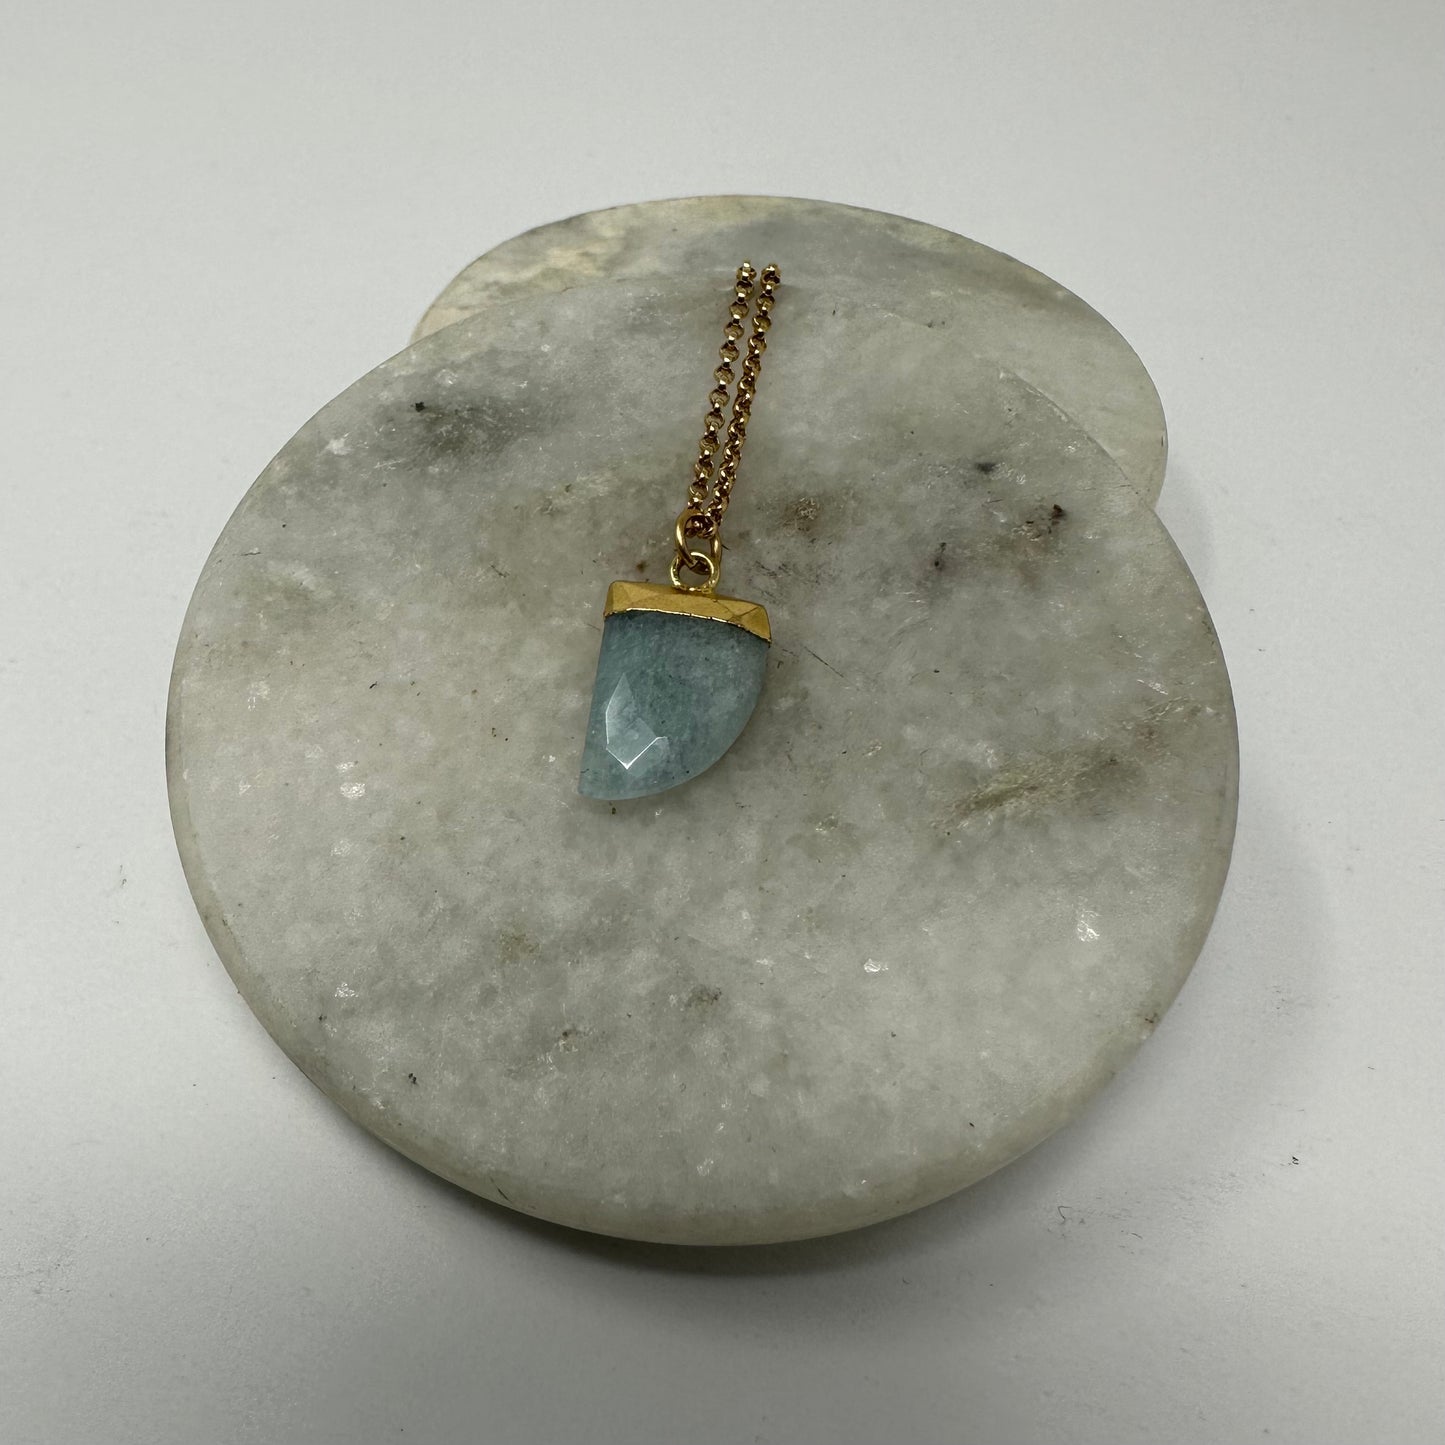 Horn shape aquamarine pendant